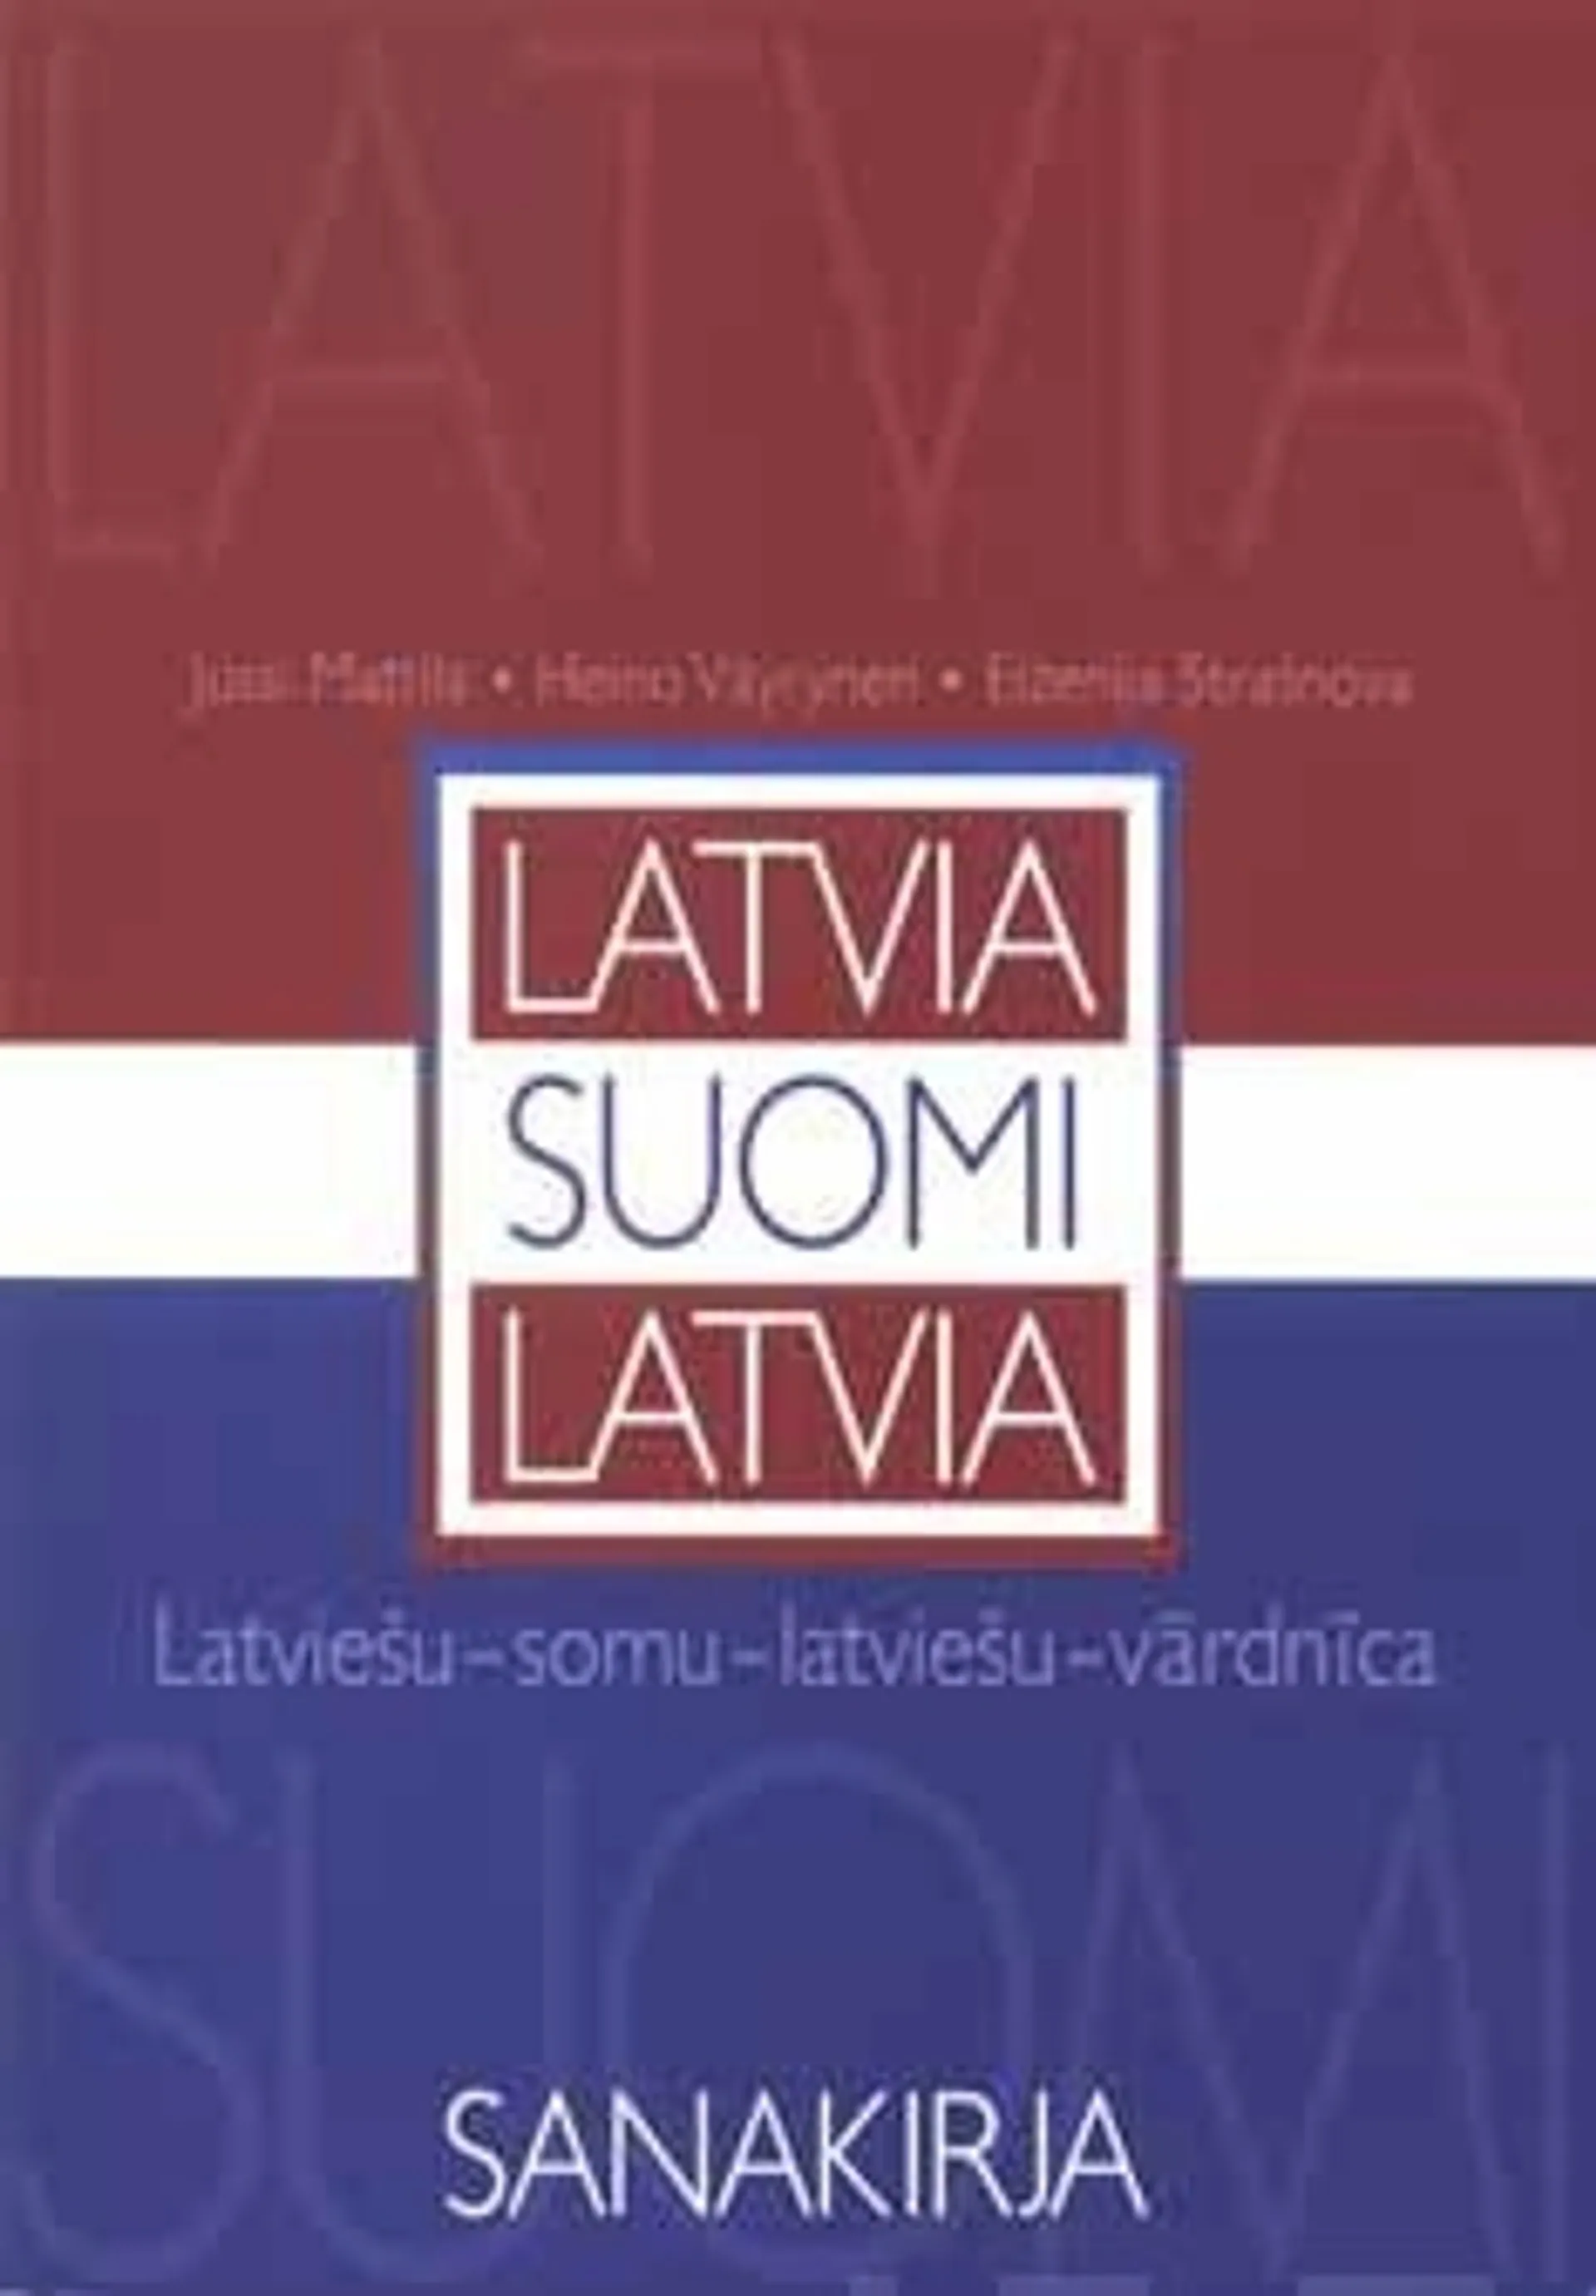 Latvia-suomi-latvia sanakirja